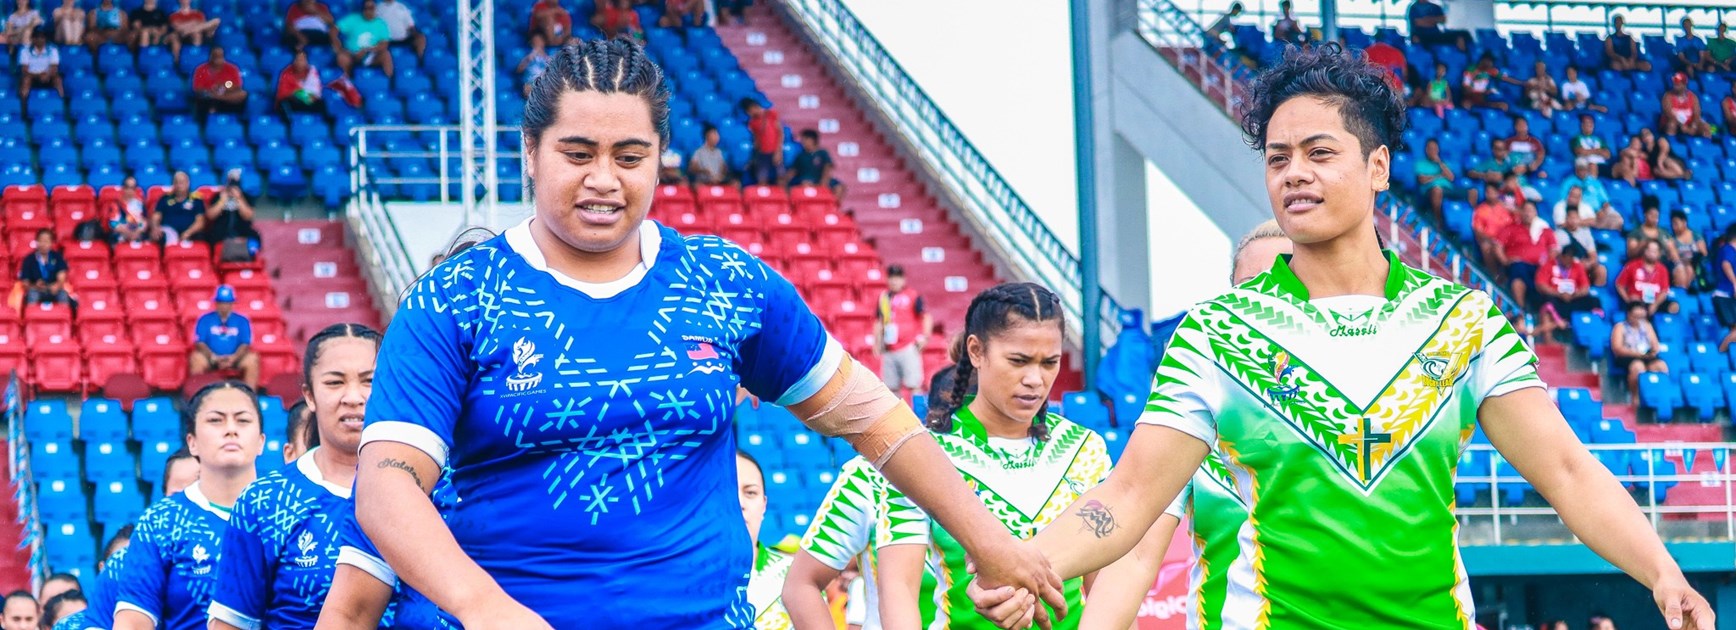 Club teammates make history in Pacific Women's RL debuts